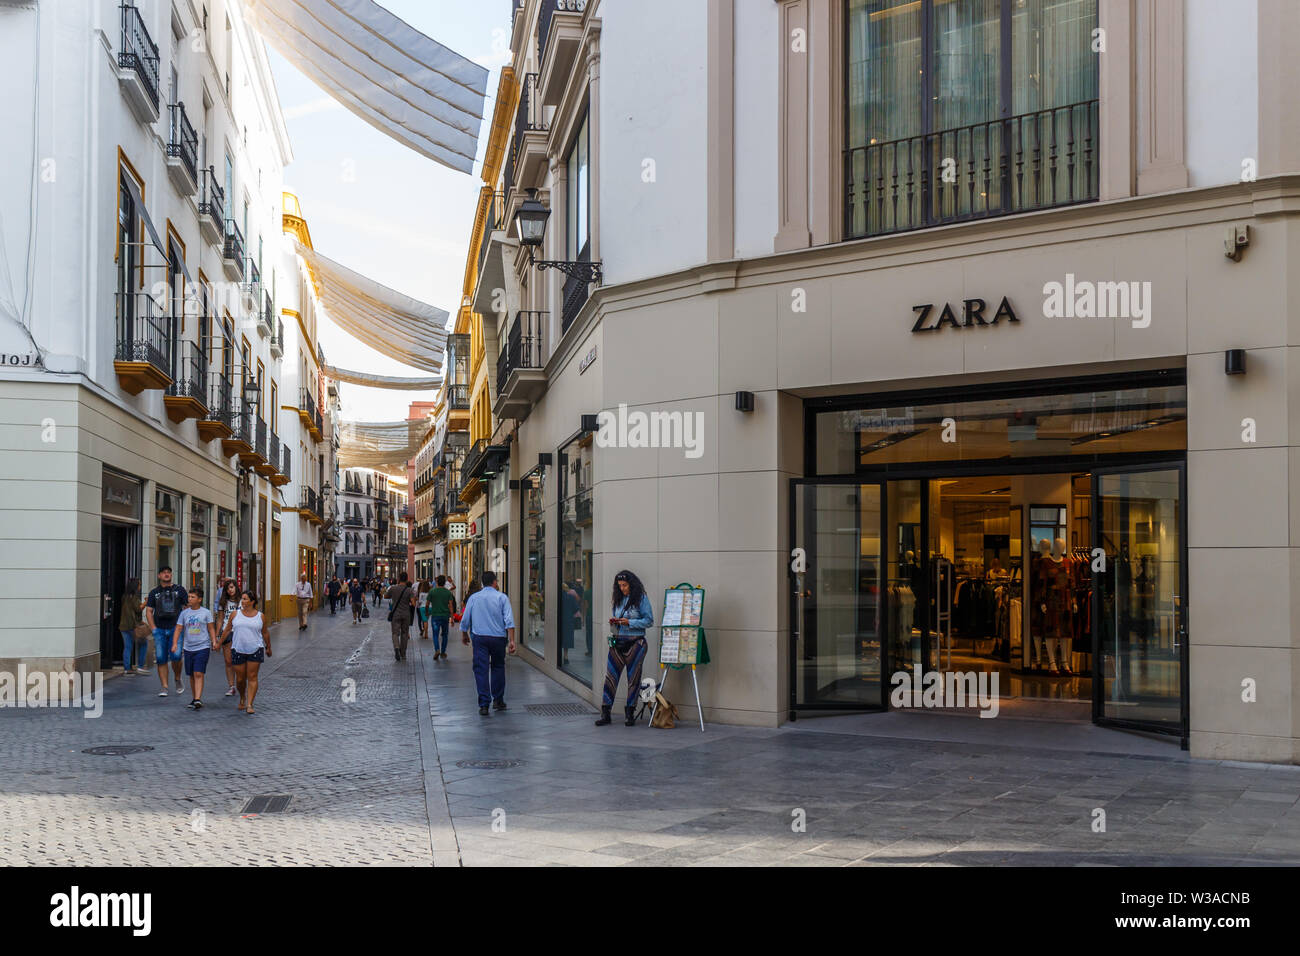 Séville, Espagne - 3 septembre 2015 : rue commerçante avec un magasin Zara.  Zara est la marque principale du groupe Inditex Photo Stock - Alamy